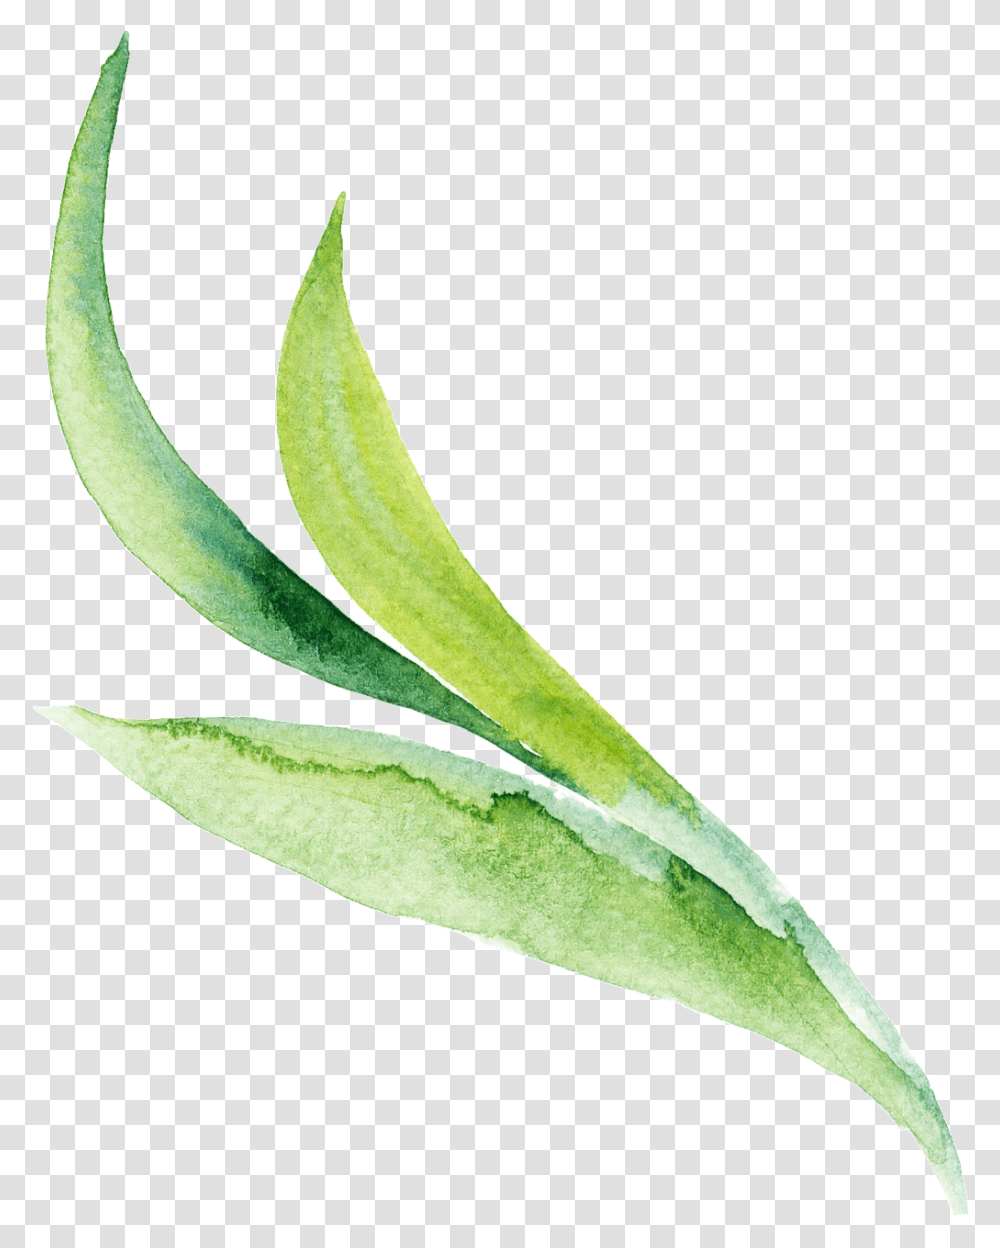 Three Aloe Cartoon Transparents Free Download Vector, Leaf, Plant, Green, Vase Transparent Png